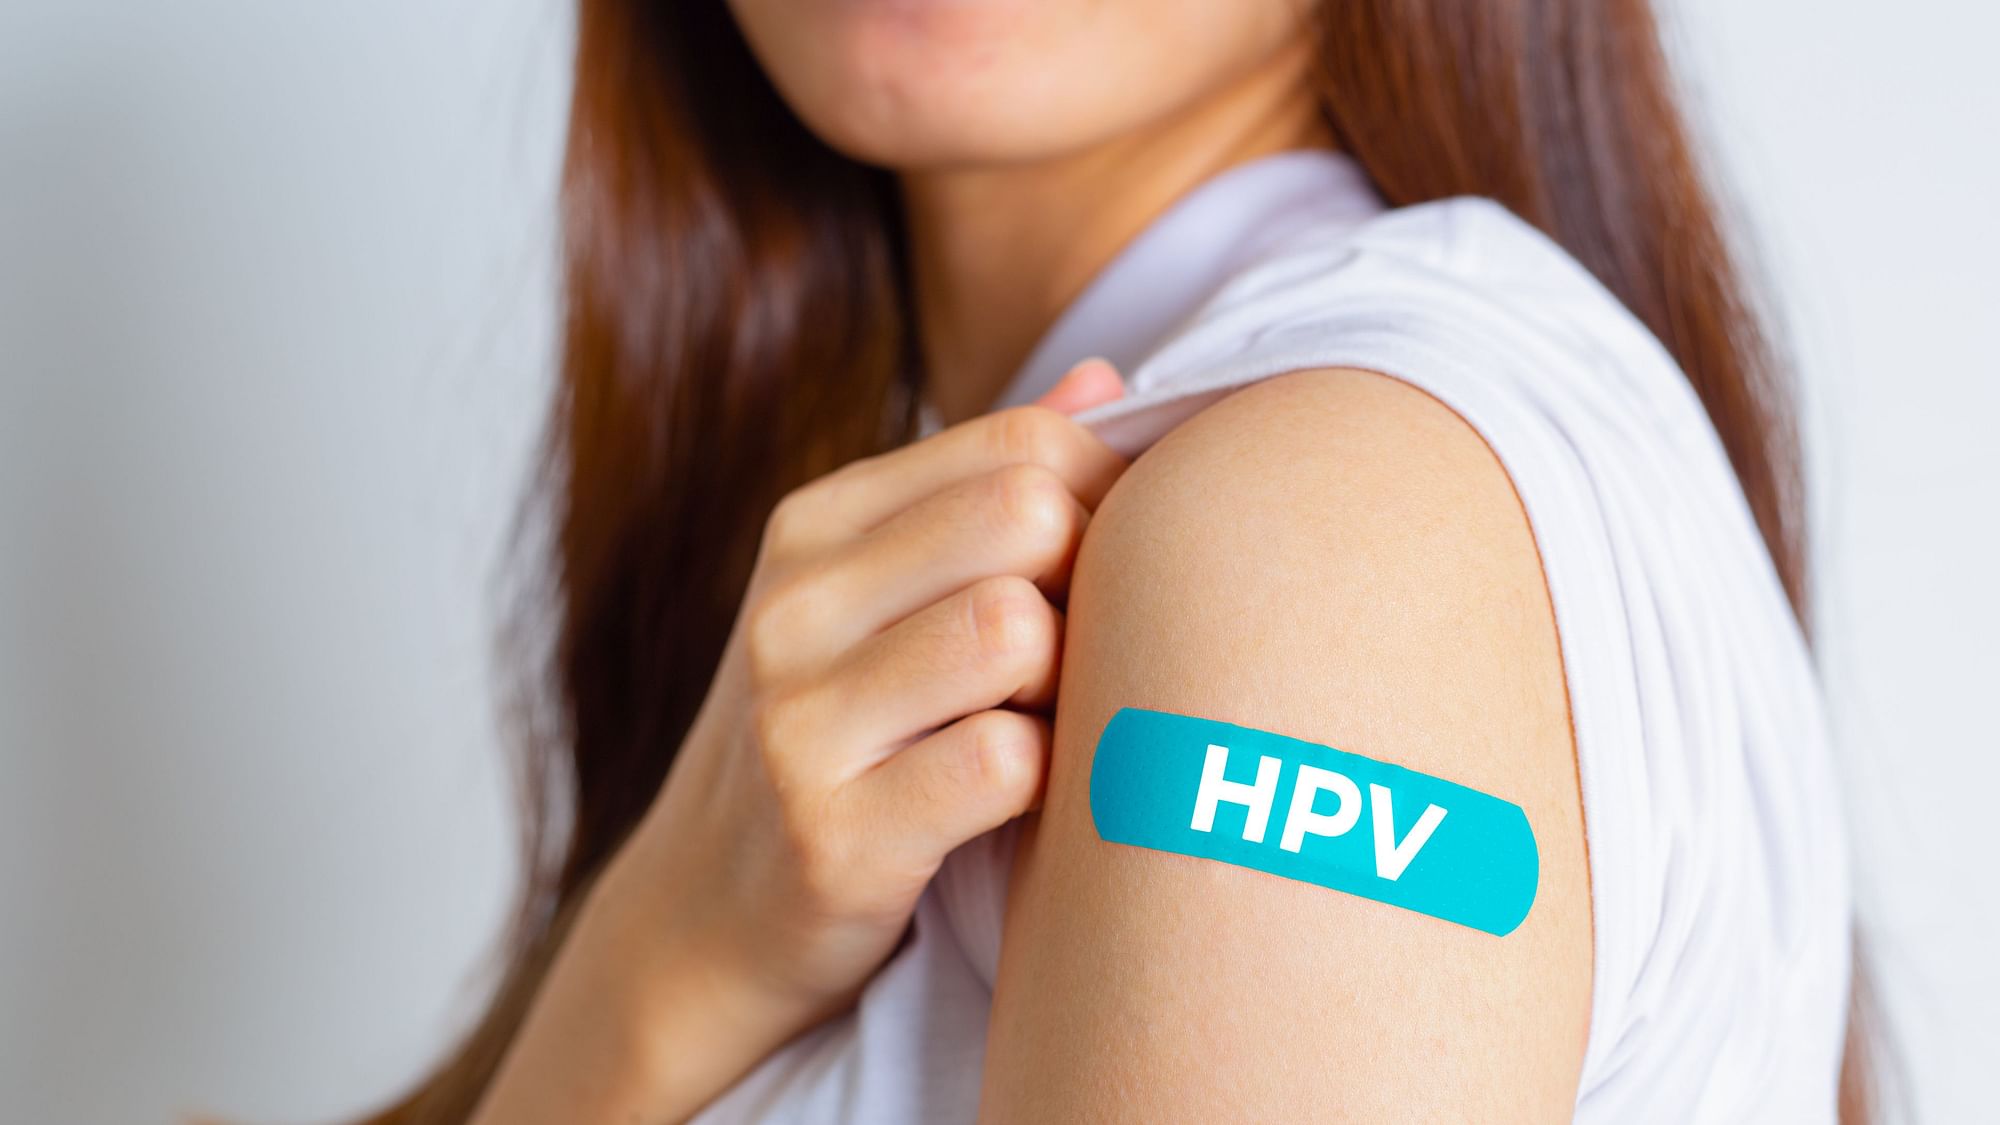 <div class="paragraphs"><p>Cervical Cancer Vaccine: पहली स्वदेशी एचपीवी वैक्सीन तय समय पर हुई लांच.</p></div>